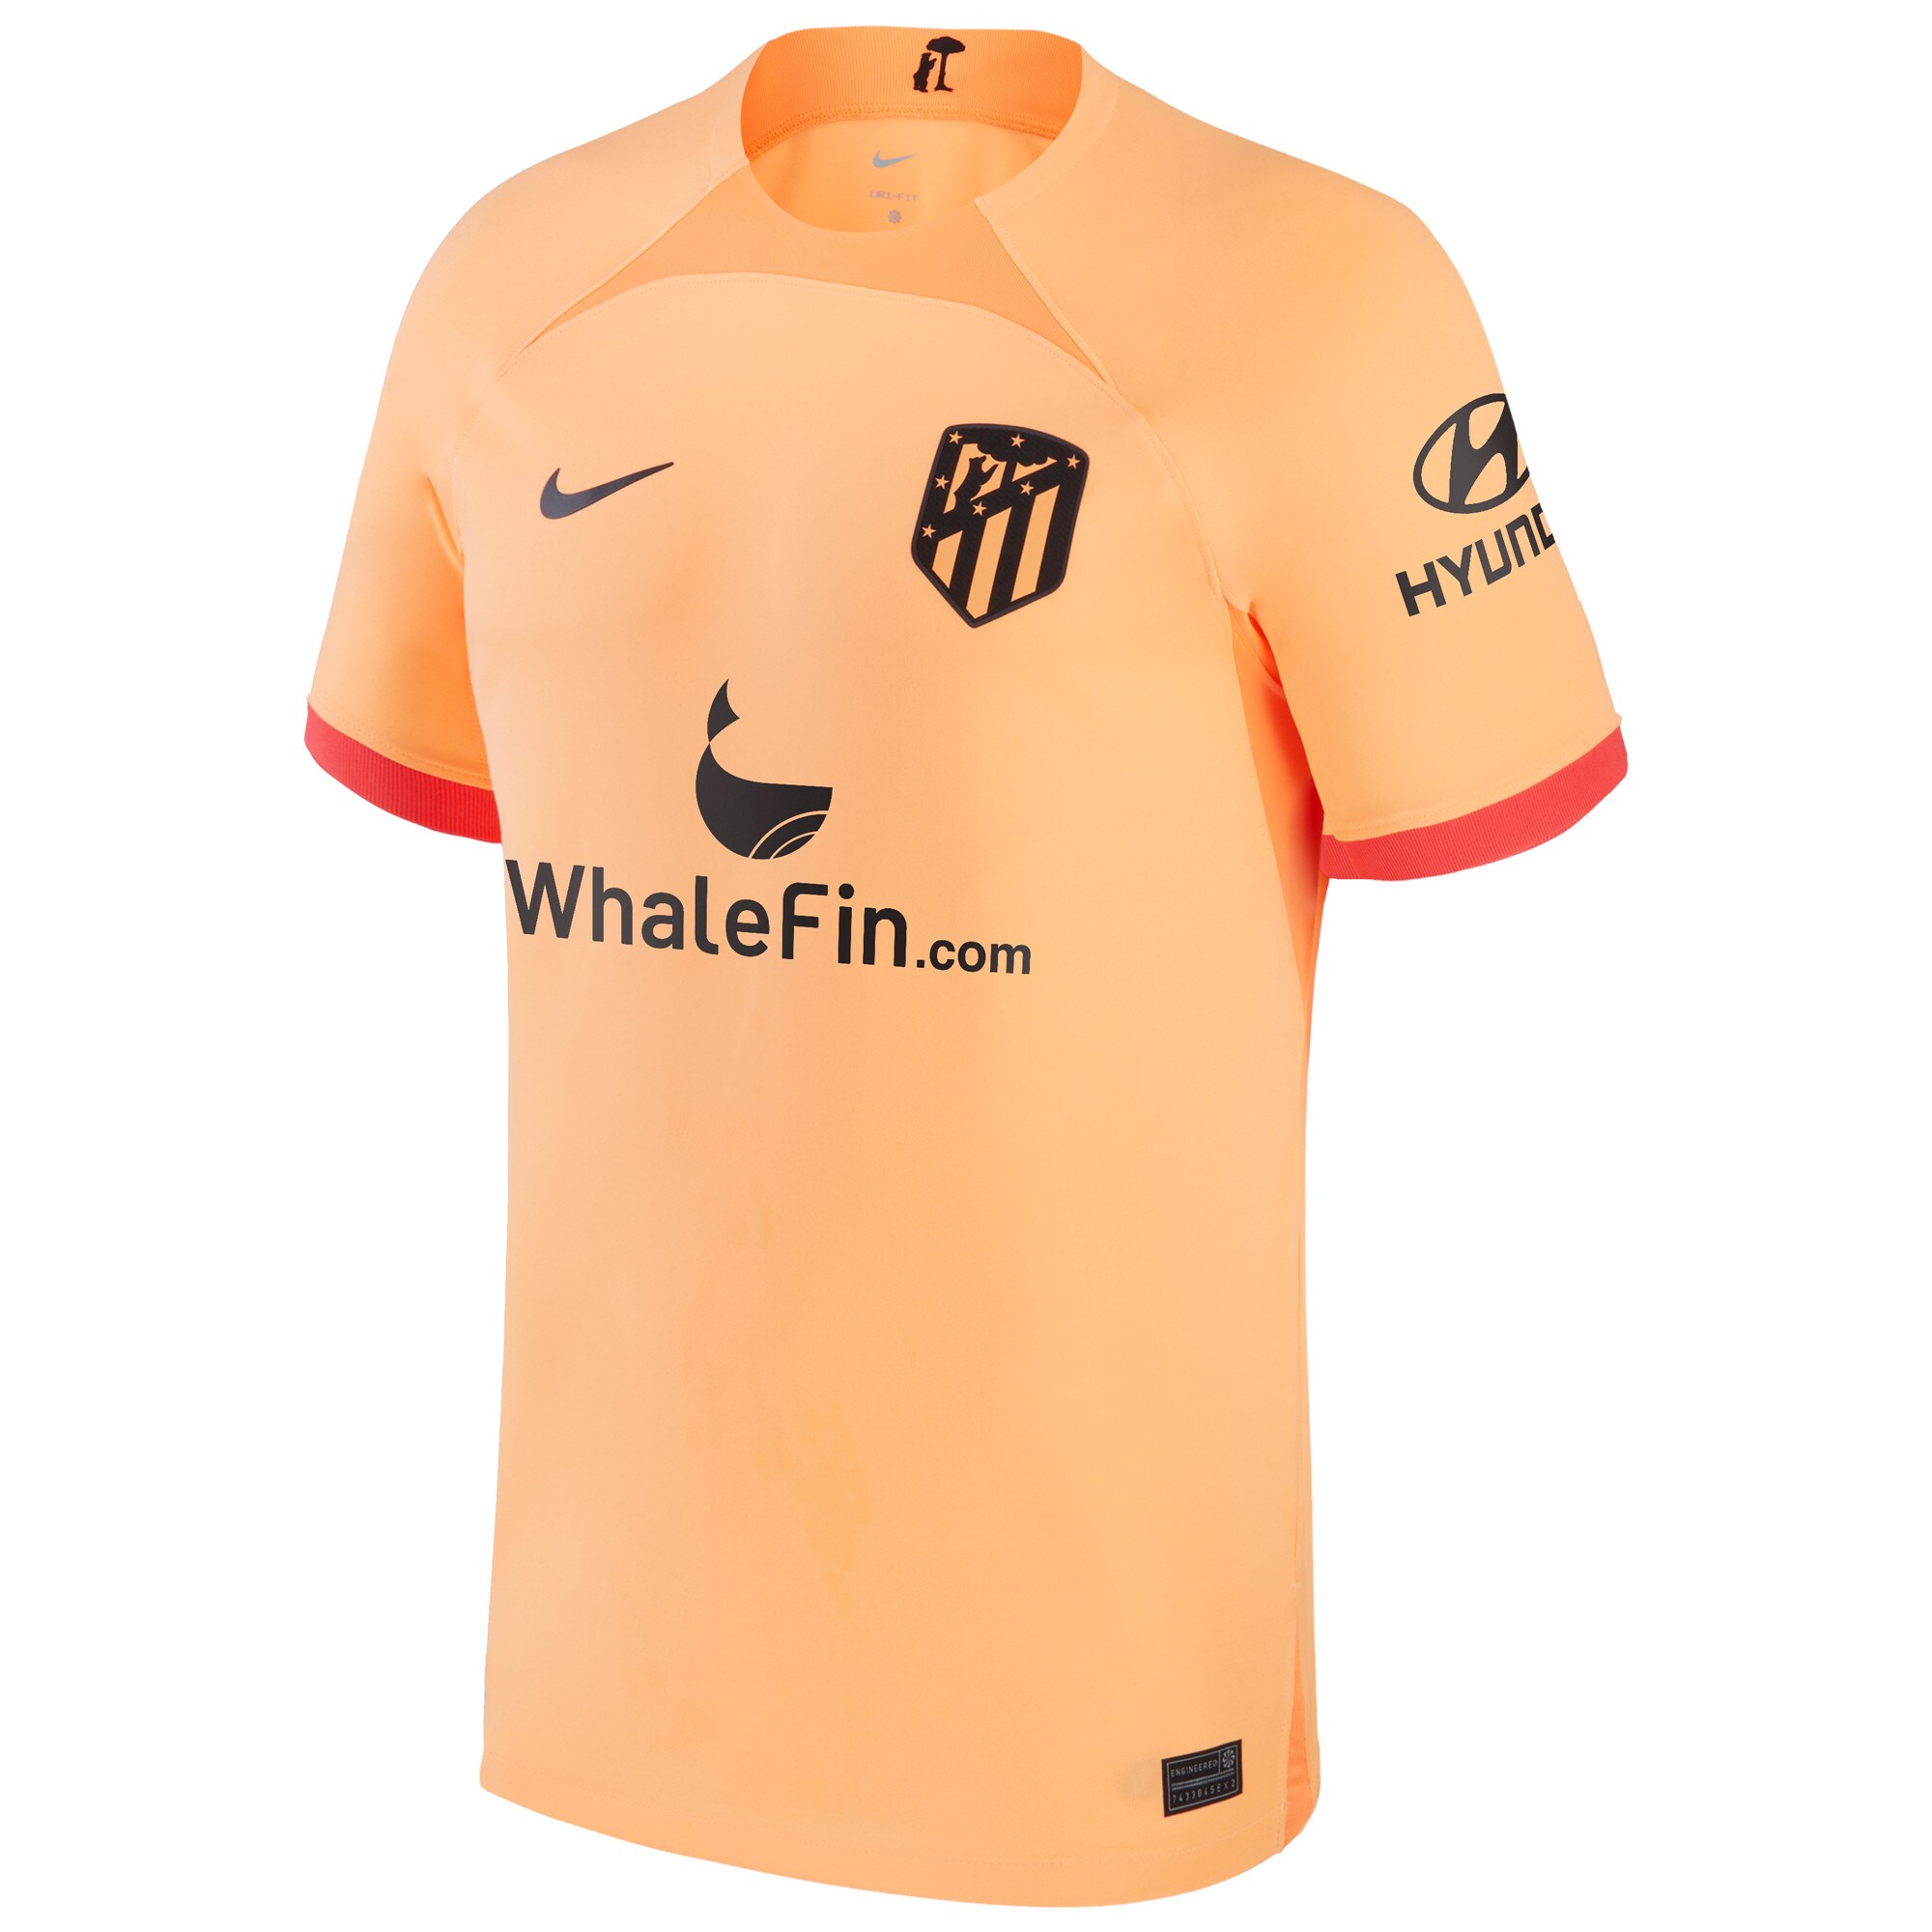 Atlético de Madrid Third Stadium Shirt 2022-23 with Barrios 24 printing